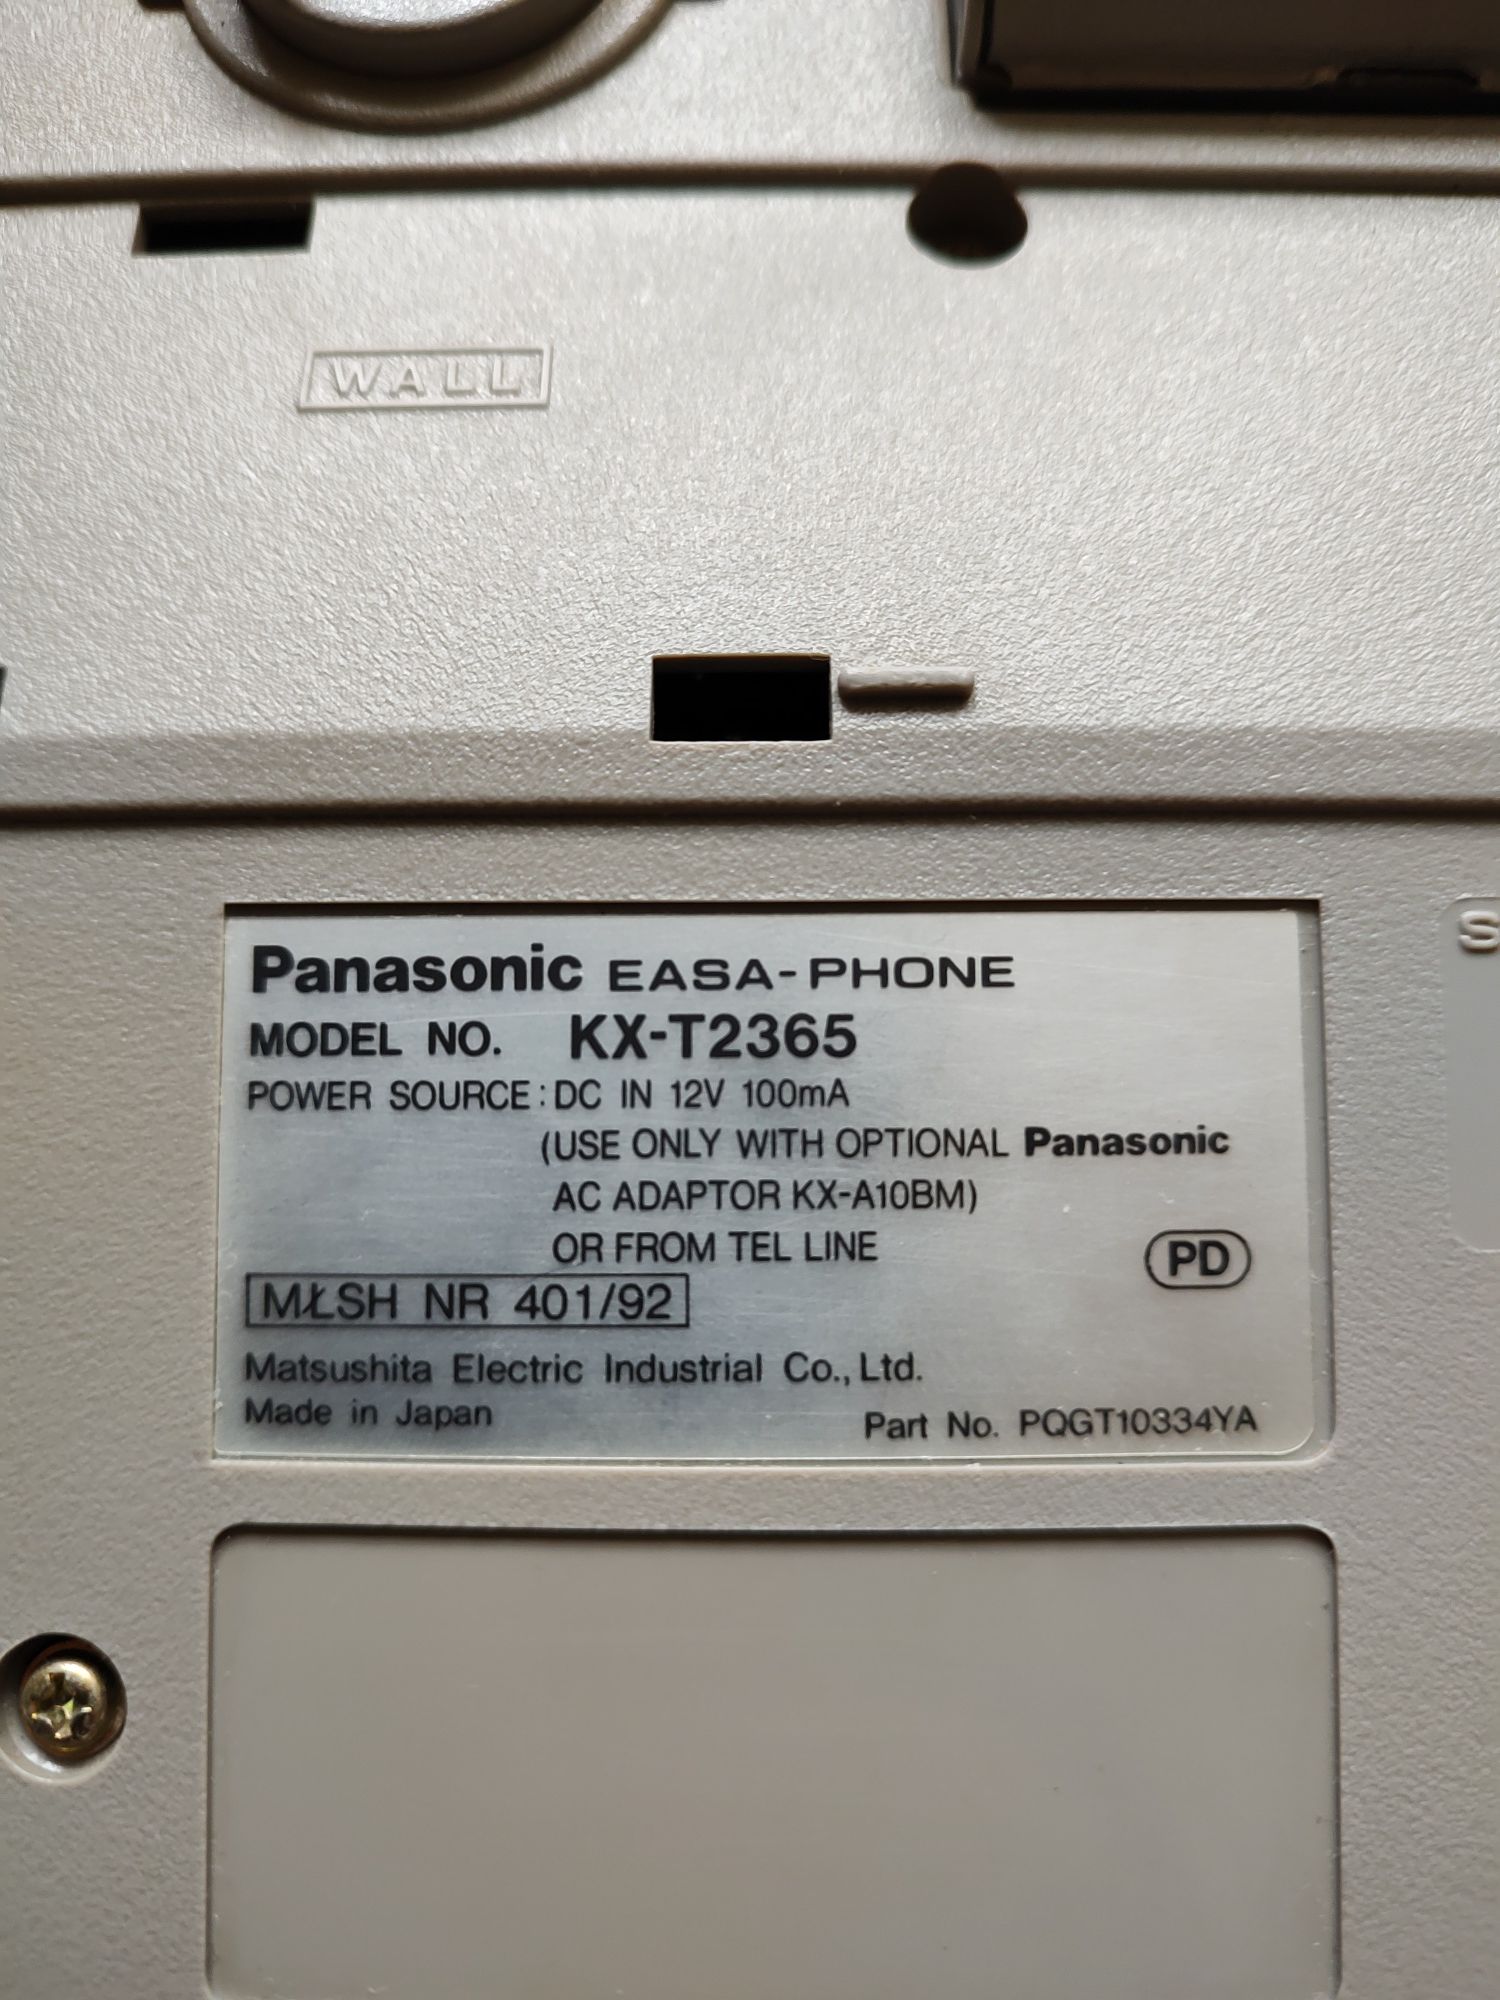 Telefon stacjonarny Panasonic